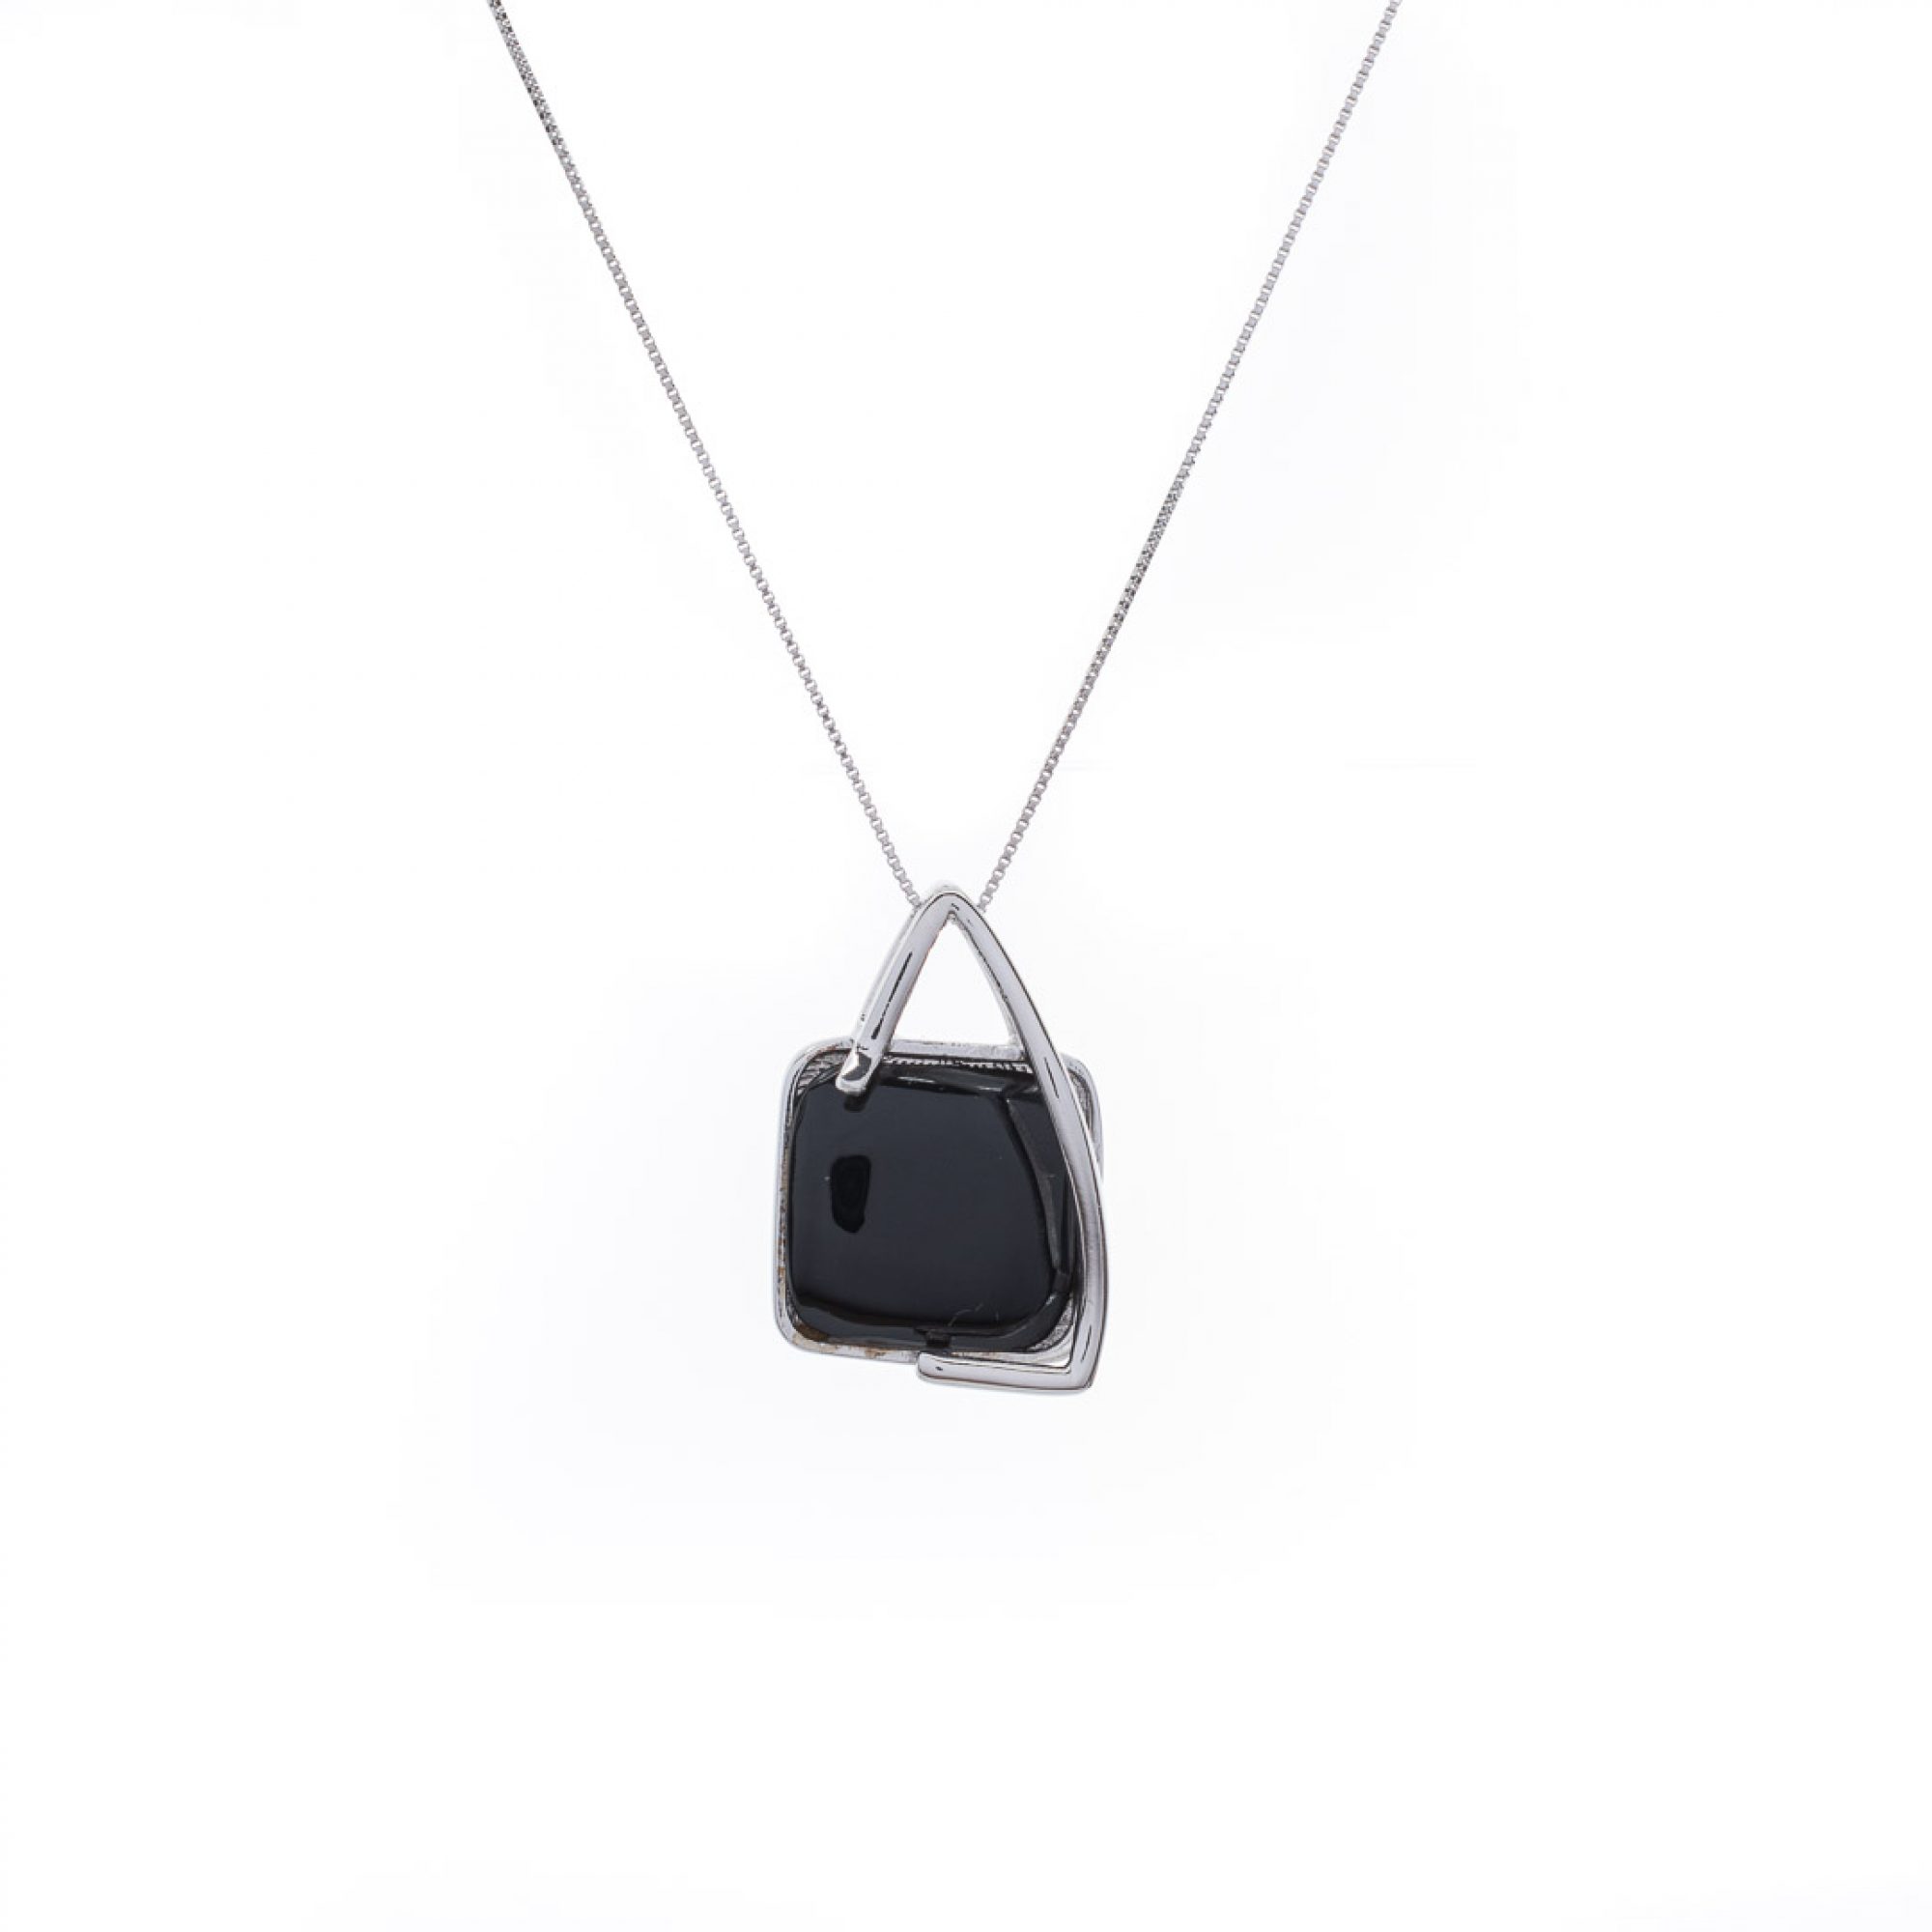 Black agate stone necklace